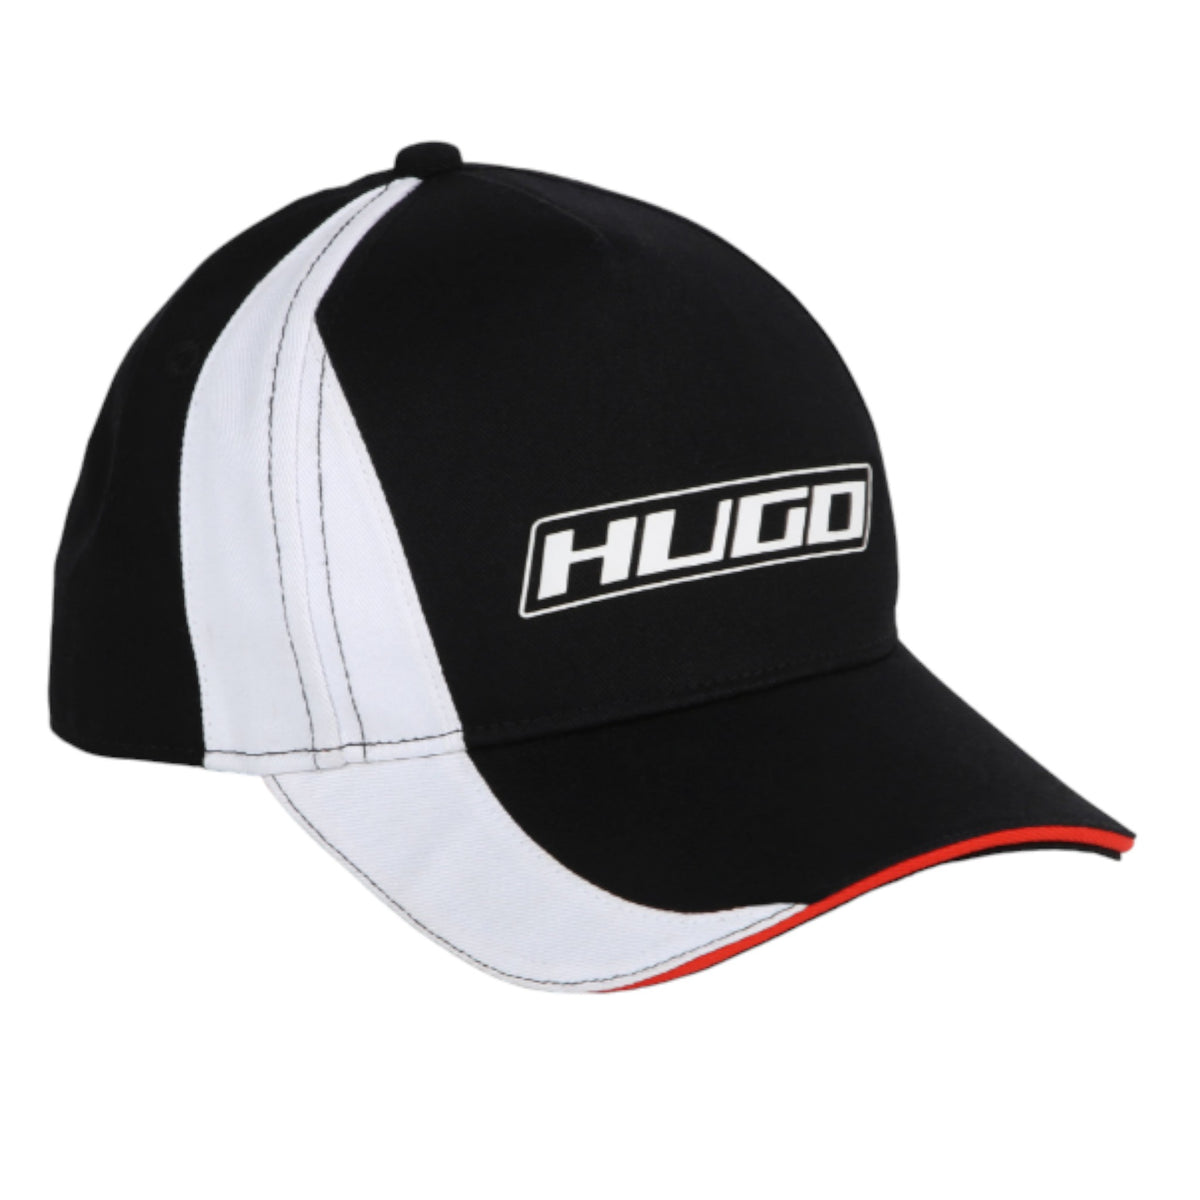 Hugo by Hugo Boss Kids Adjustable Racing Baseball Cap